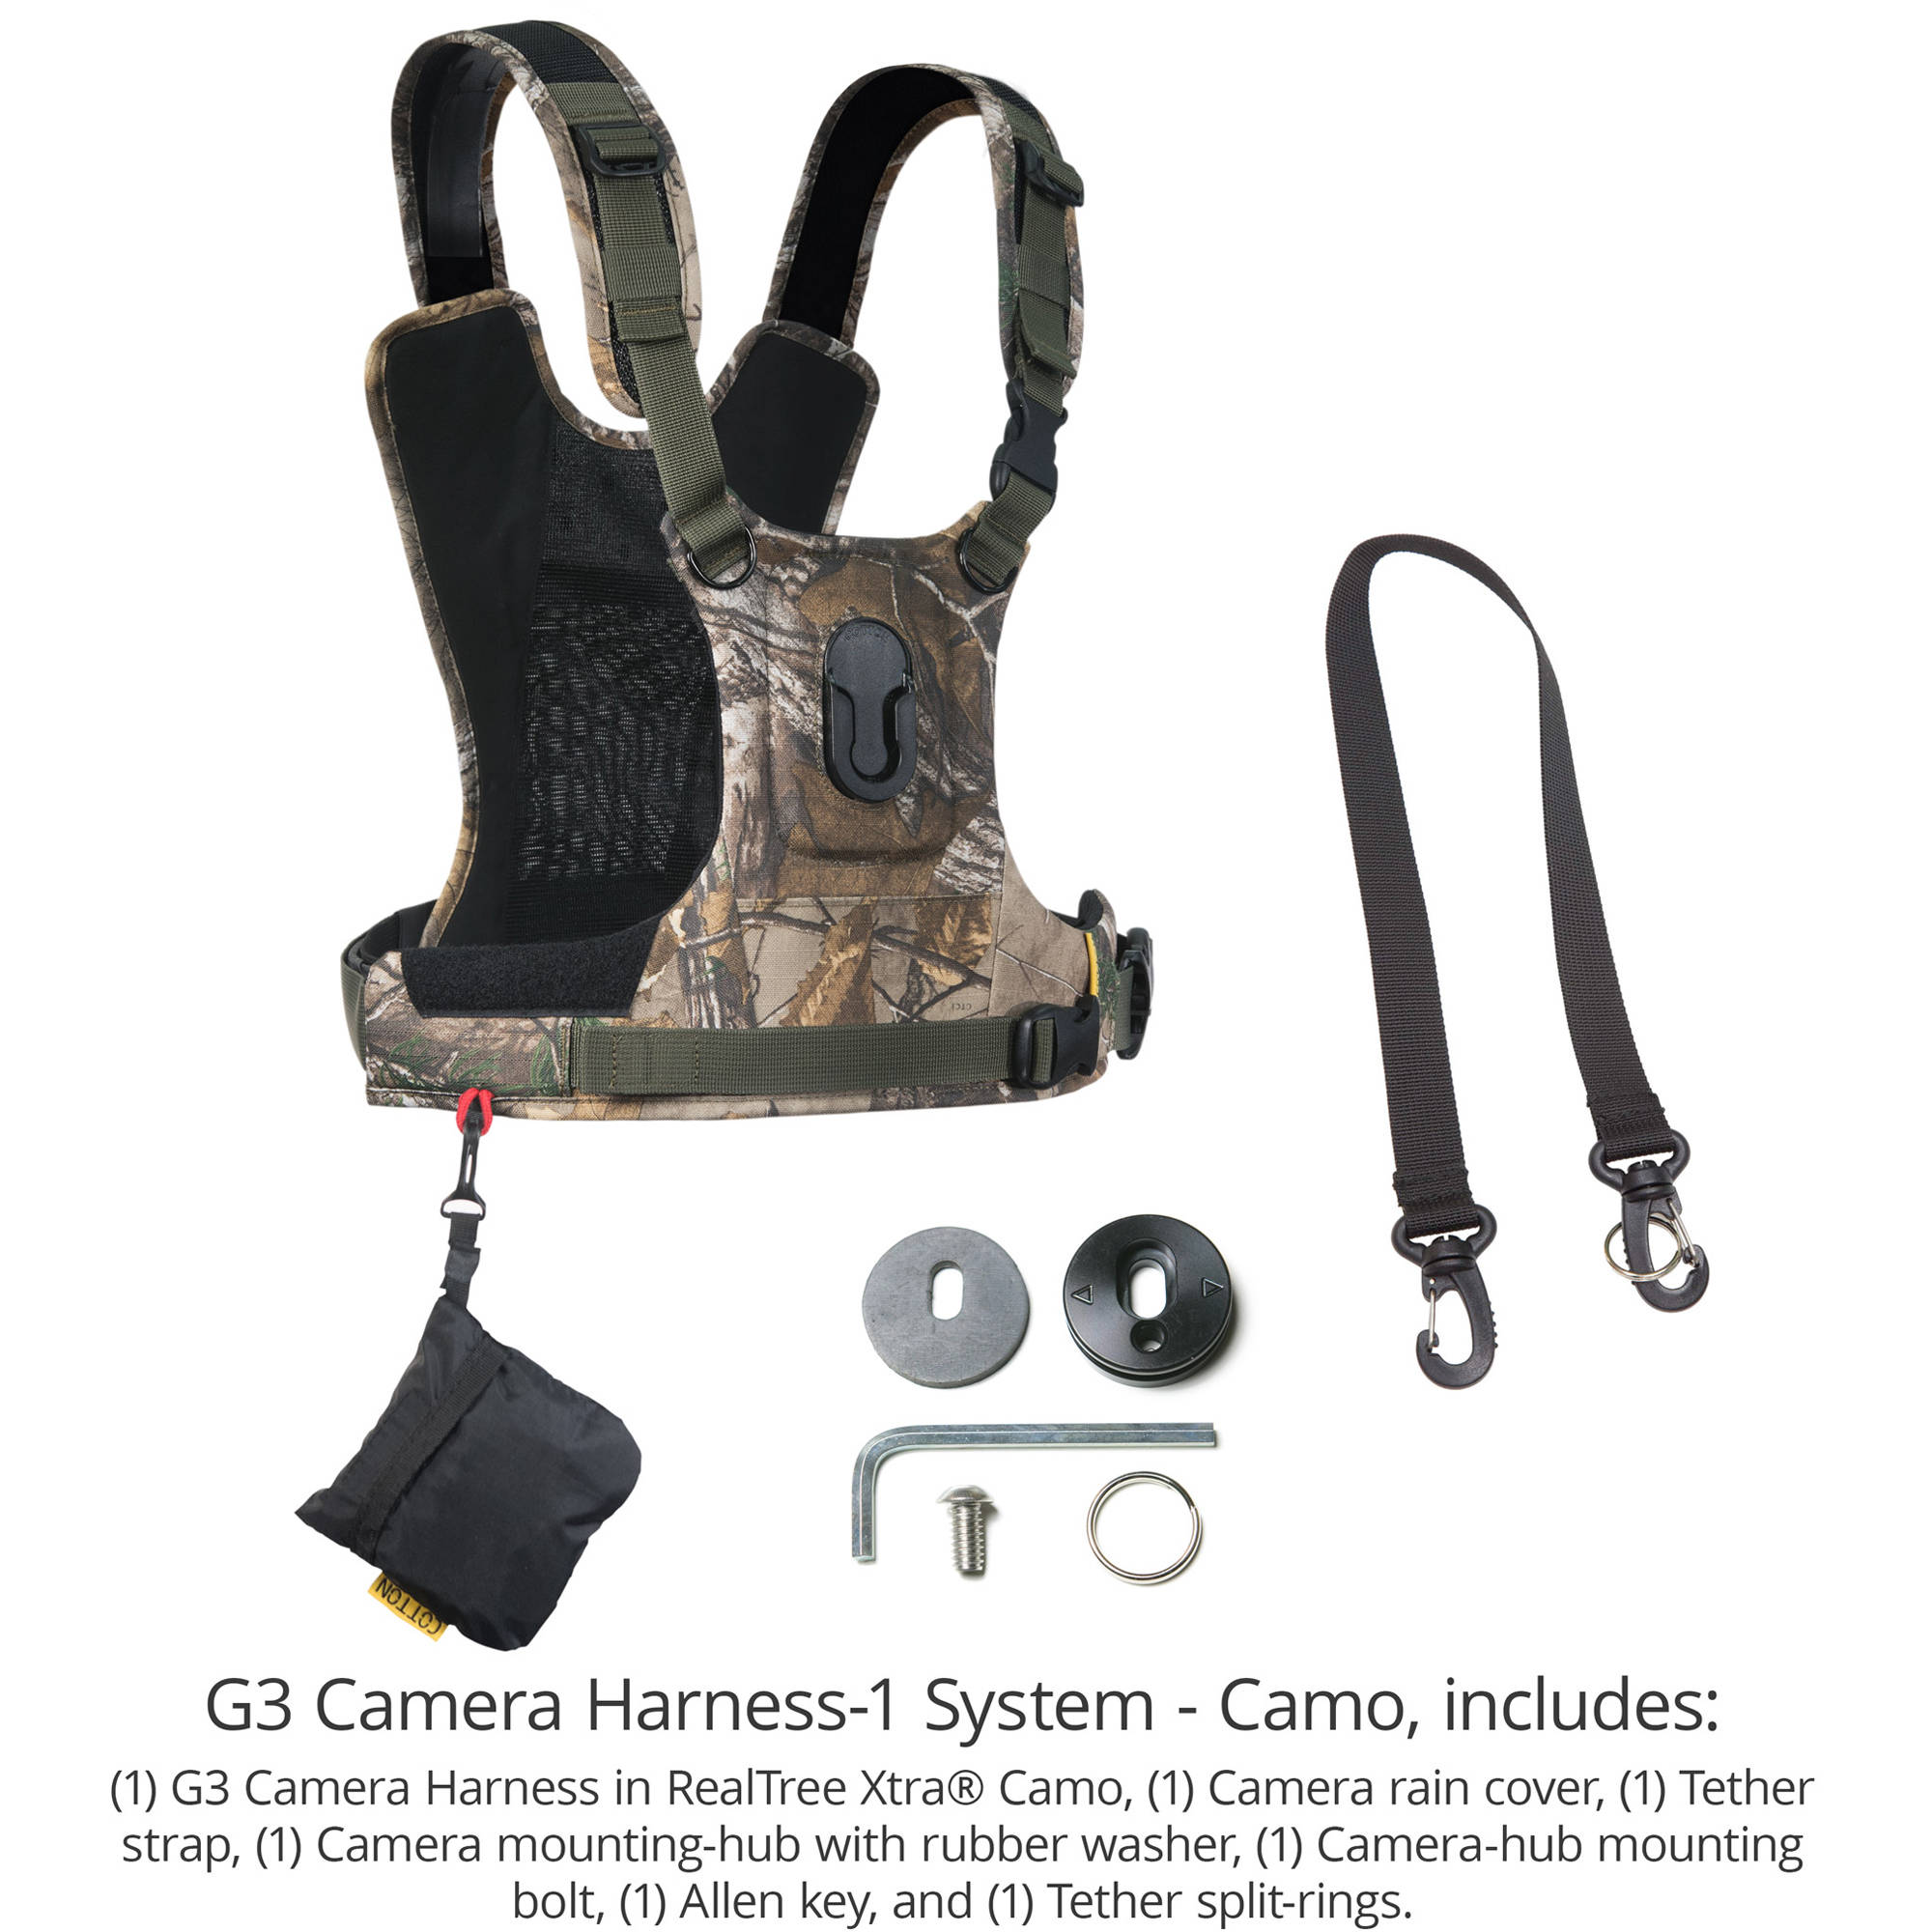 Cotton Carrier CCS G3 Camera Harness-1 - Camo